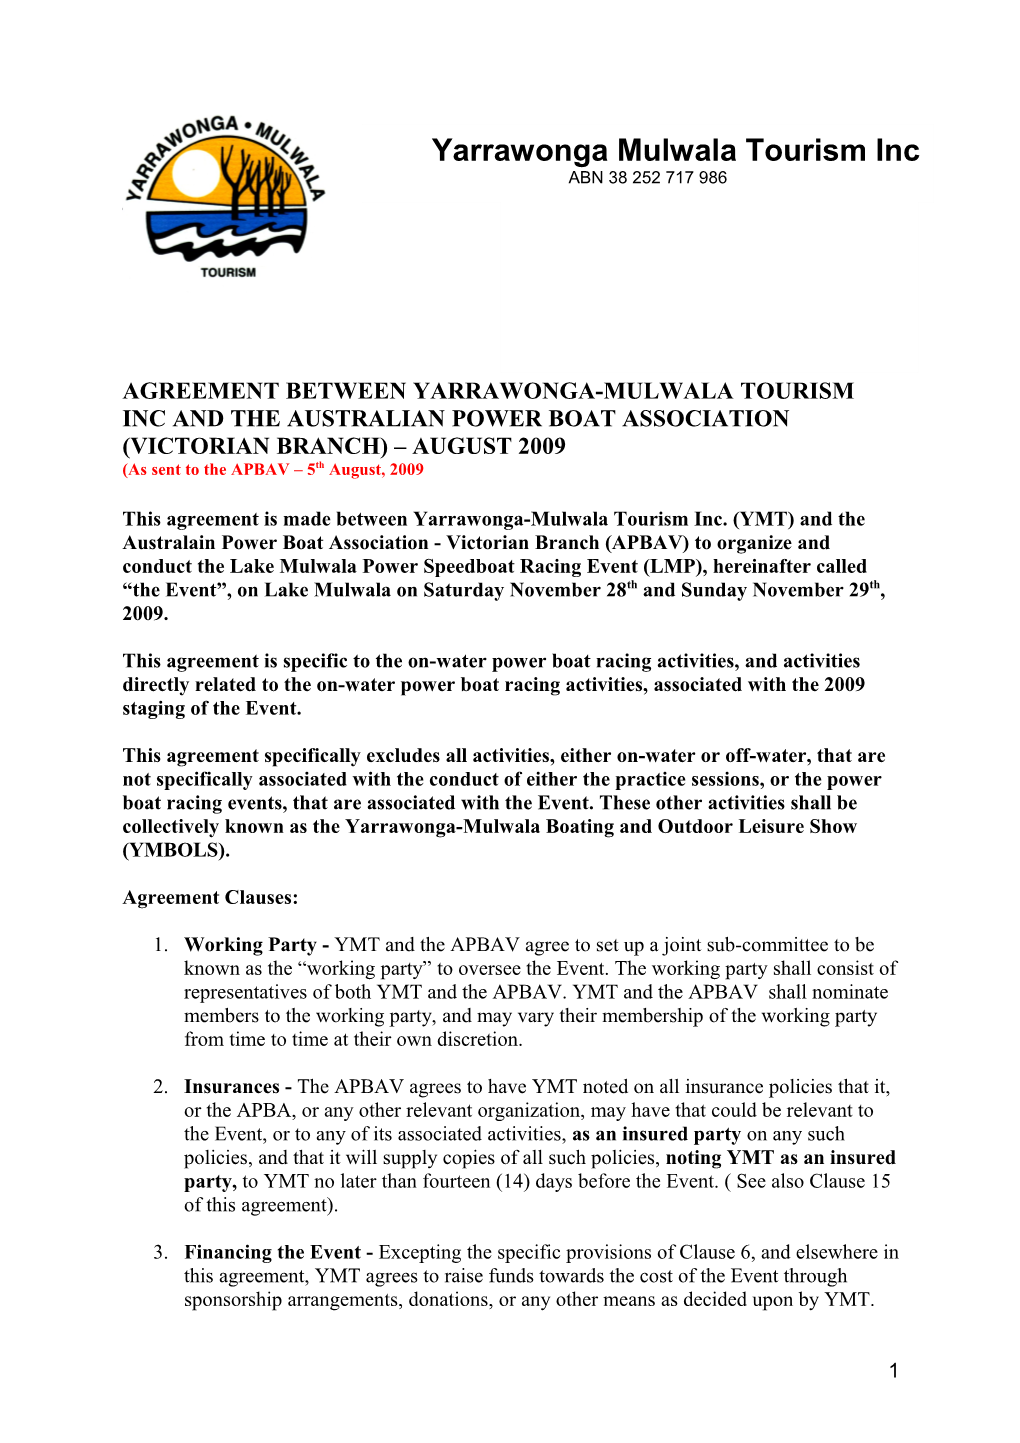 Agreement Between Yarrawonga-Mulwala Tourism Inc and the Australian Power Boat Association